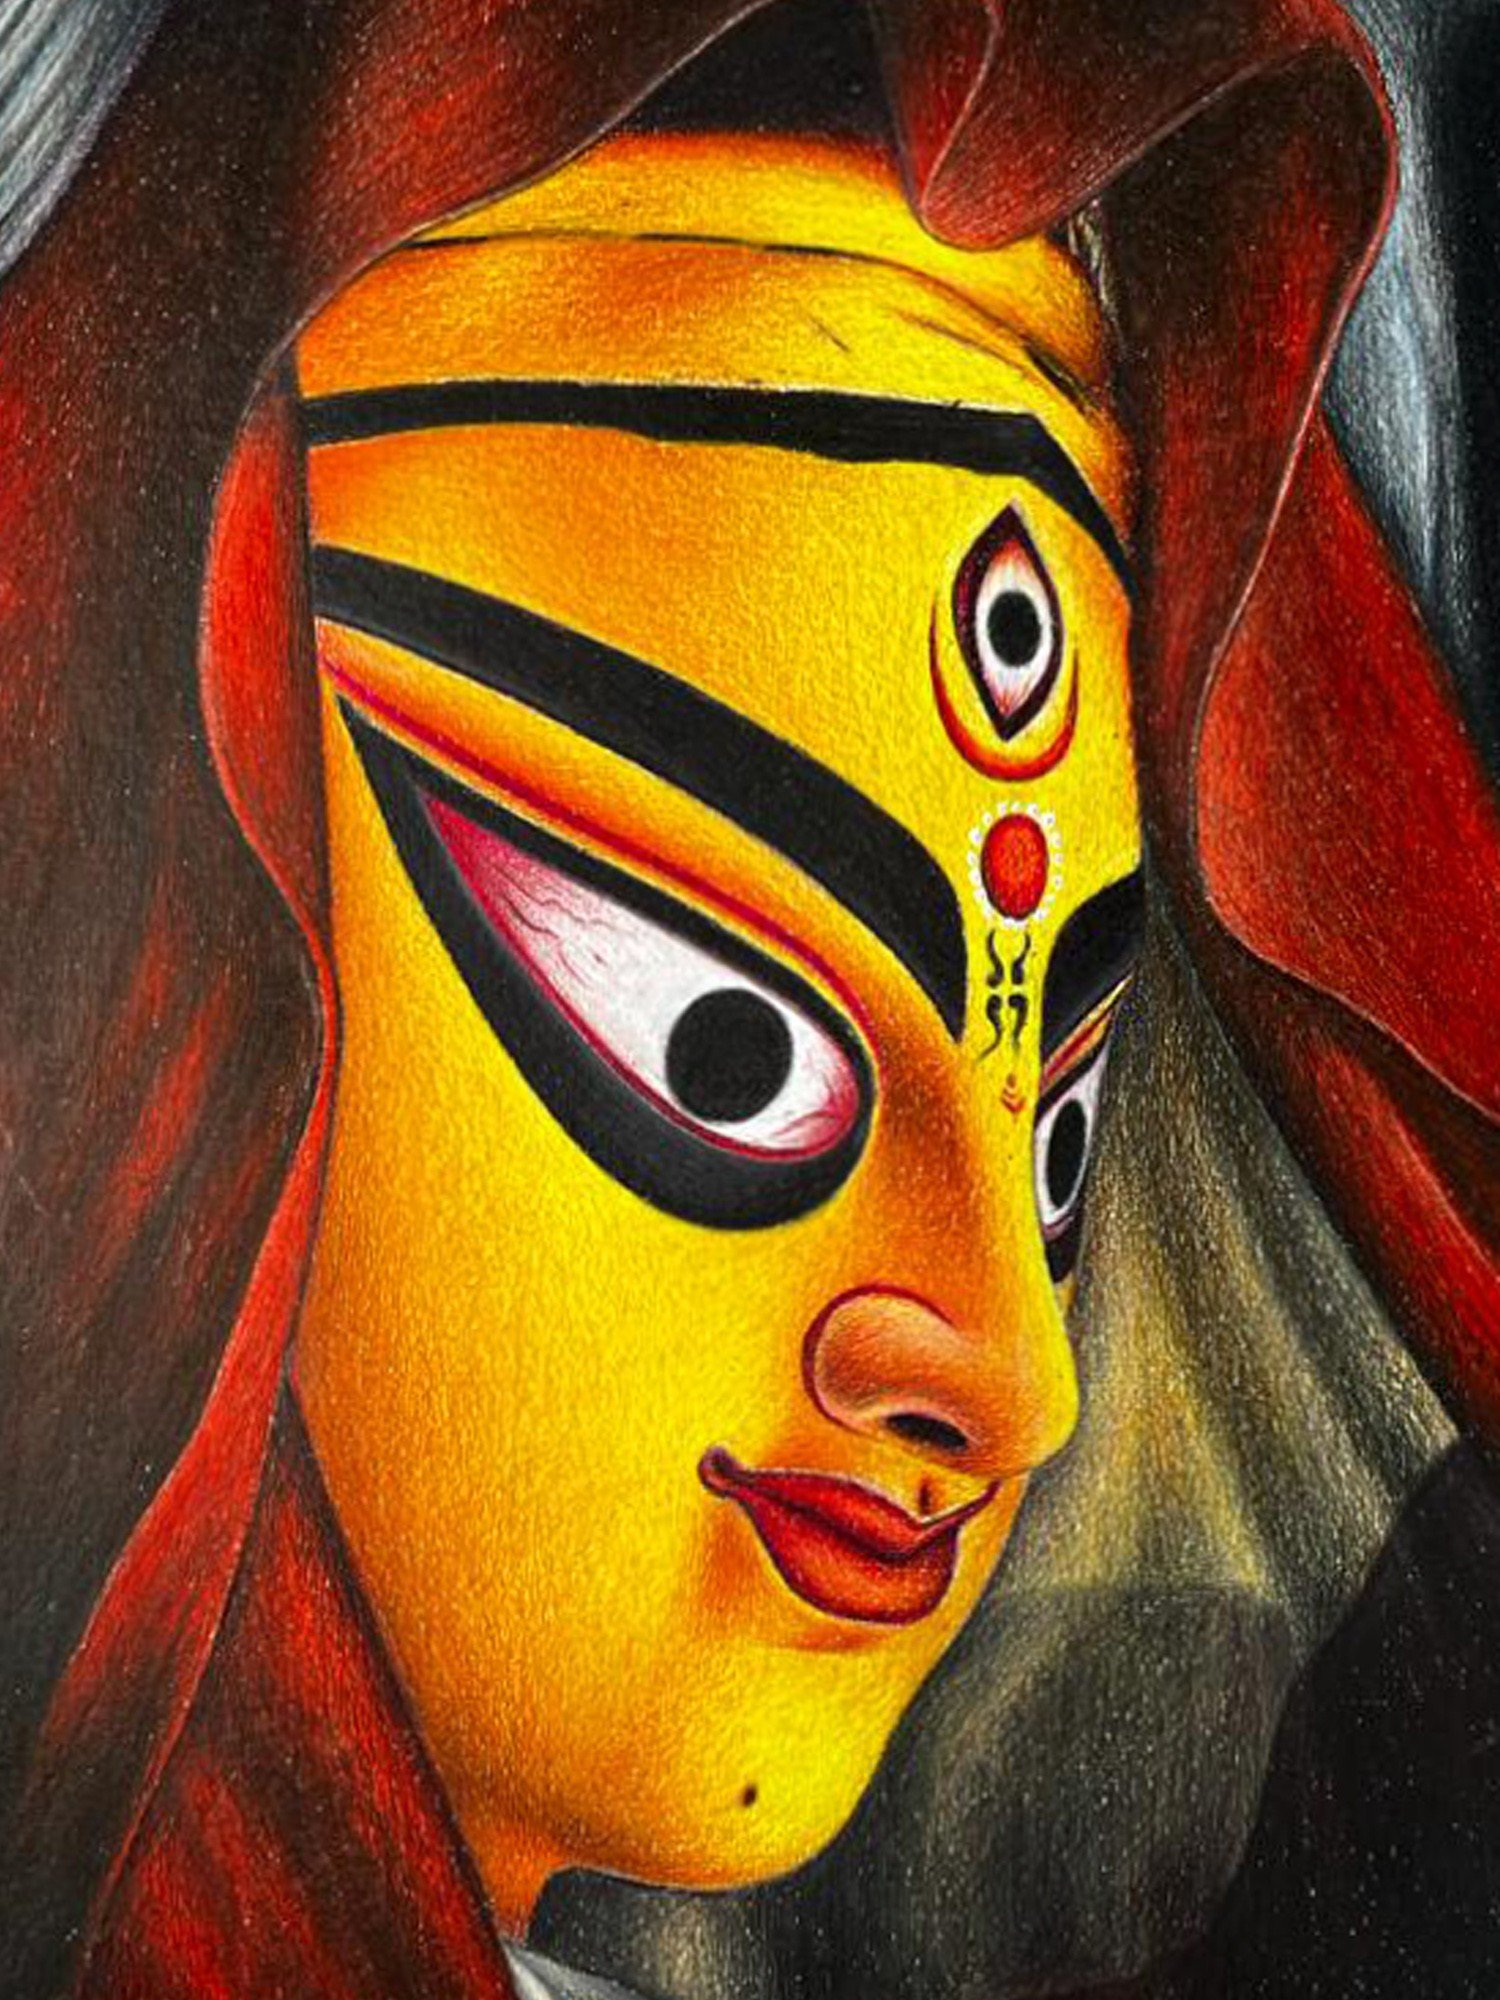 Maa❤️ #durga #durgapuja #navratri #painting #drawing #art #artwork #maadurga  #artist | Instagram